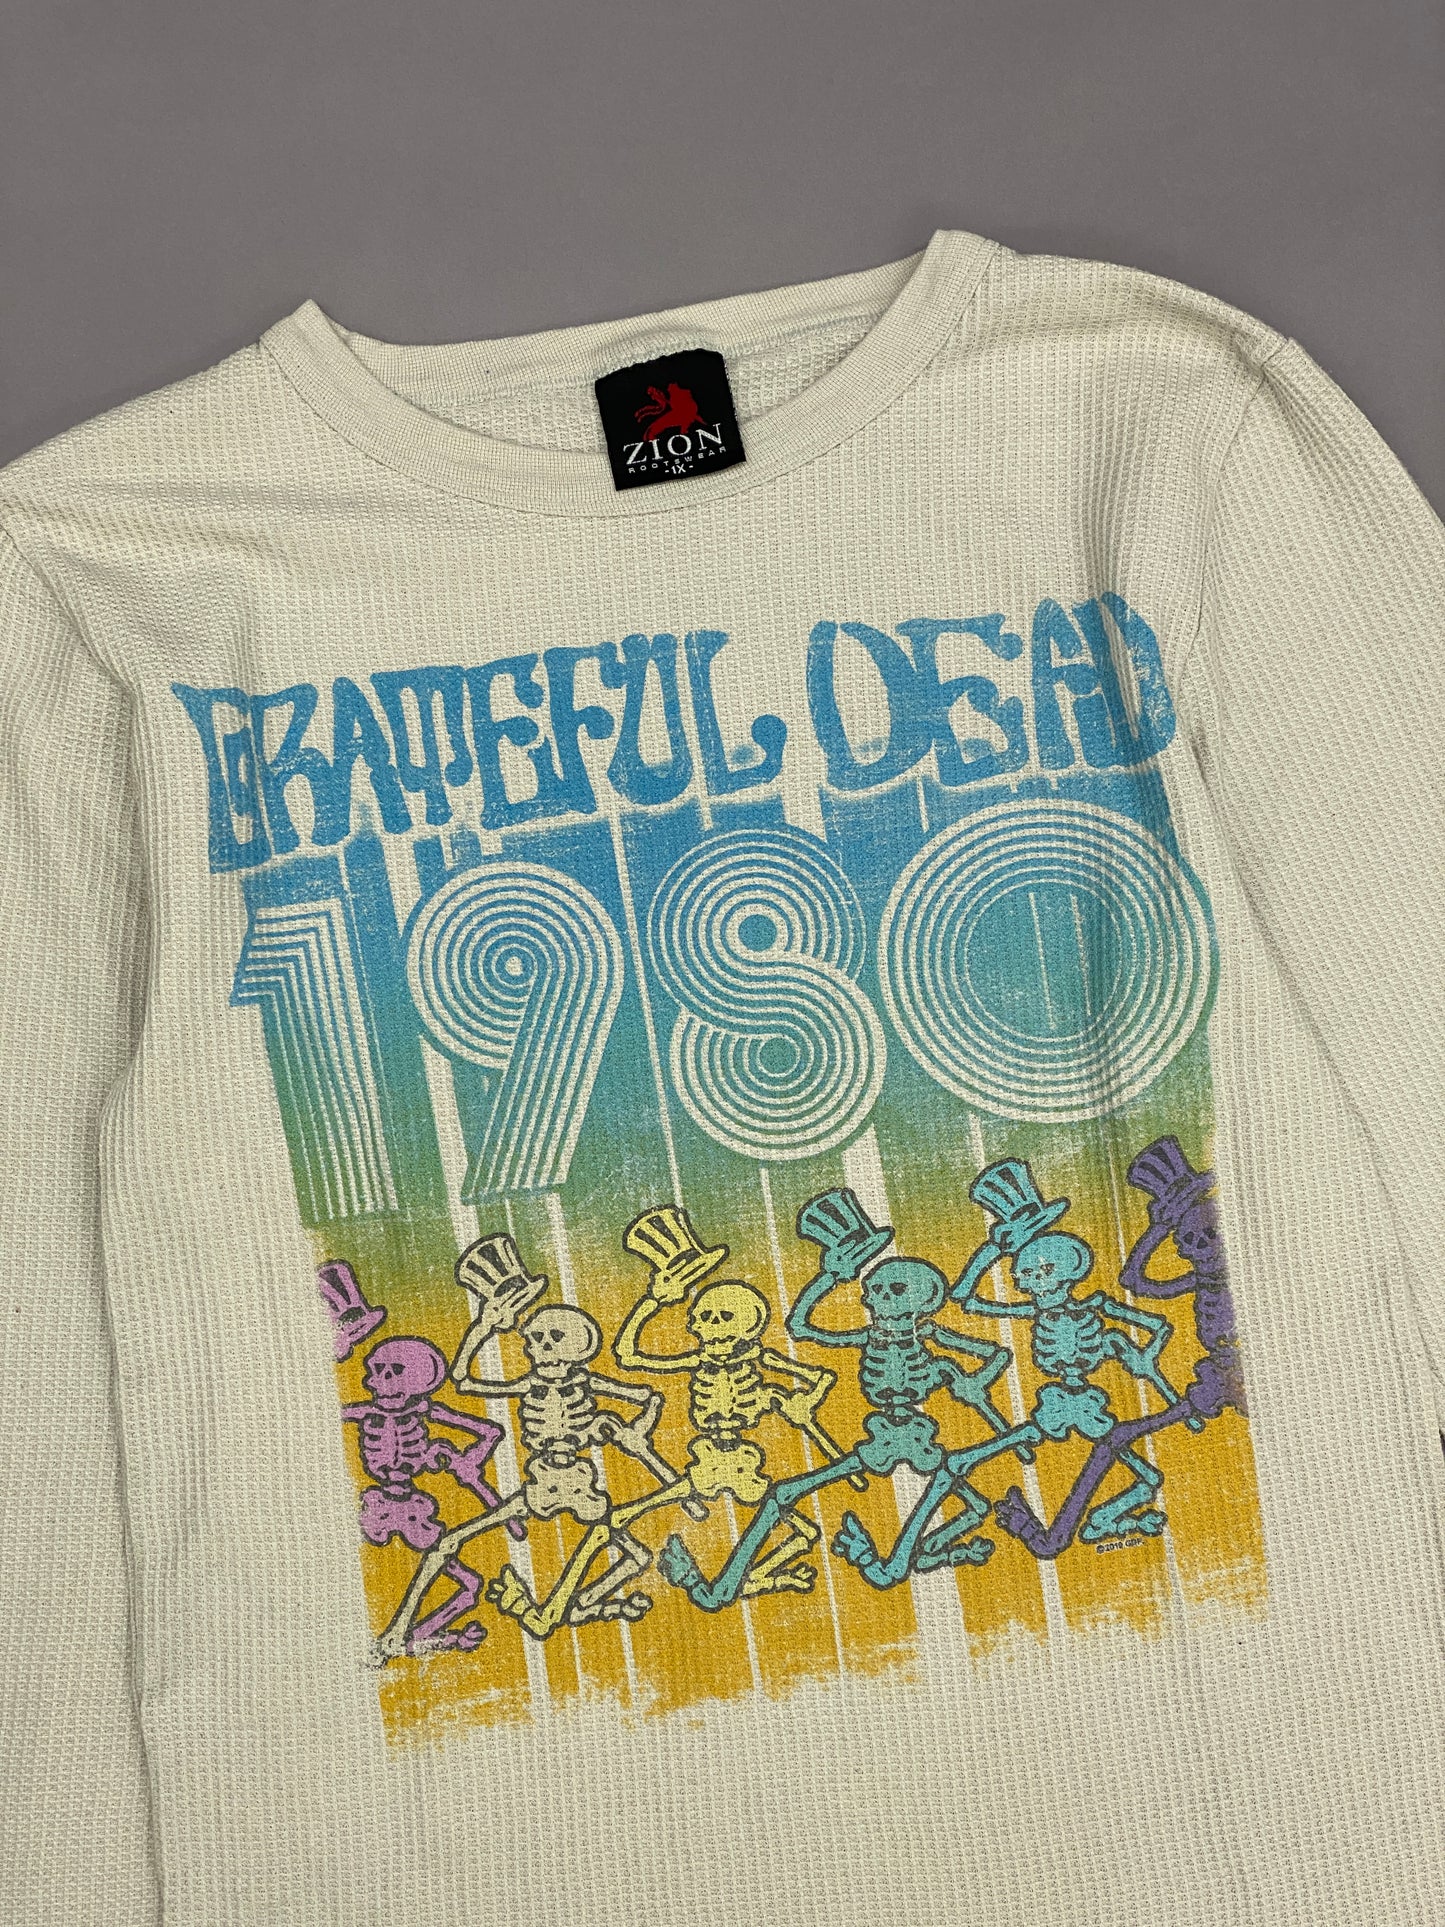 Grateful Dead Zion Thermal T-Shirt